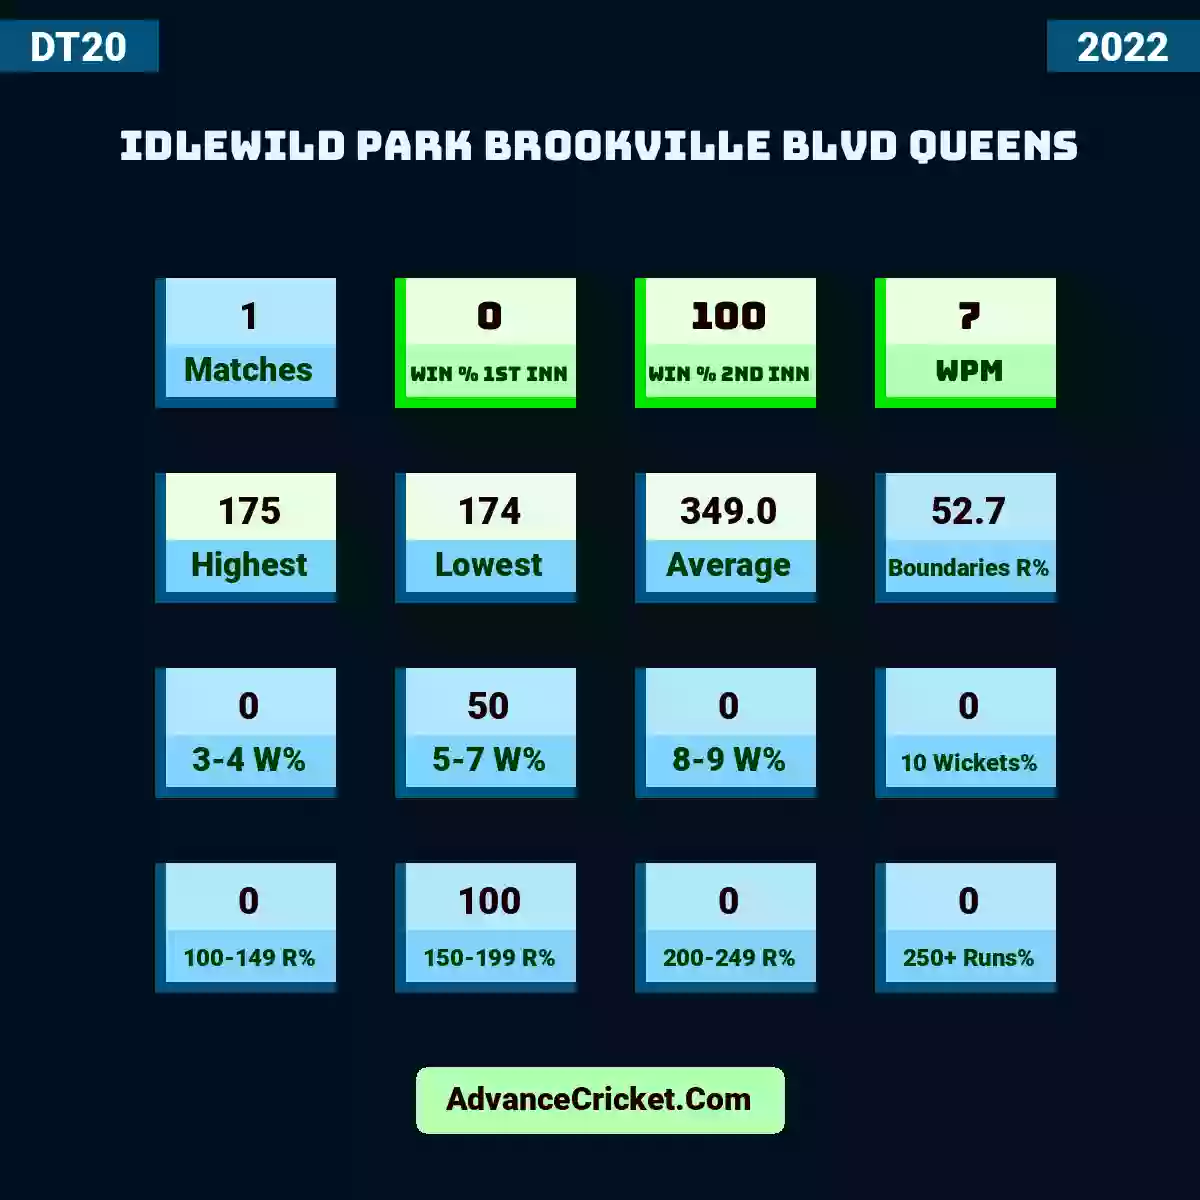 Image showing Idlewild Park Brookville Blvd Queens with Matches: 1, Win % 1st Inn: 0, Win % 2nd Inn: 100, WPM: 7, Highest: 175, Lowest: 174, Average: 349.0, Boundaries R%: 52.7, 3-4 W%: 0, 5-7 W%: 50, 8-9 W%: 0, 10 Wickets%: 0, 100-149 R%: 0, 150-199 R%: 100, 200-249 R%: 0, 250+ Runs%: 0.